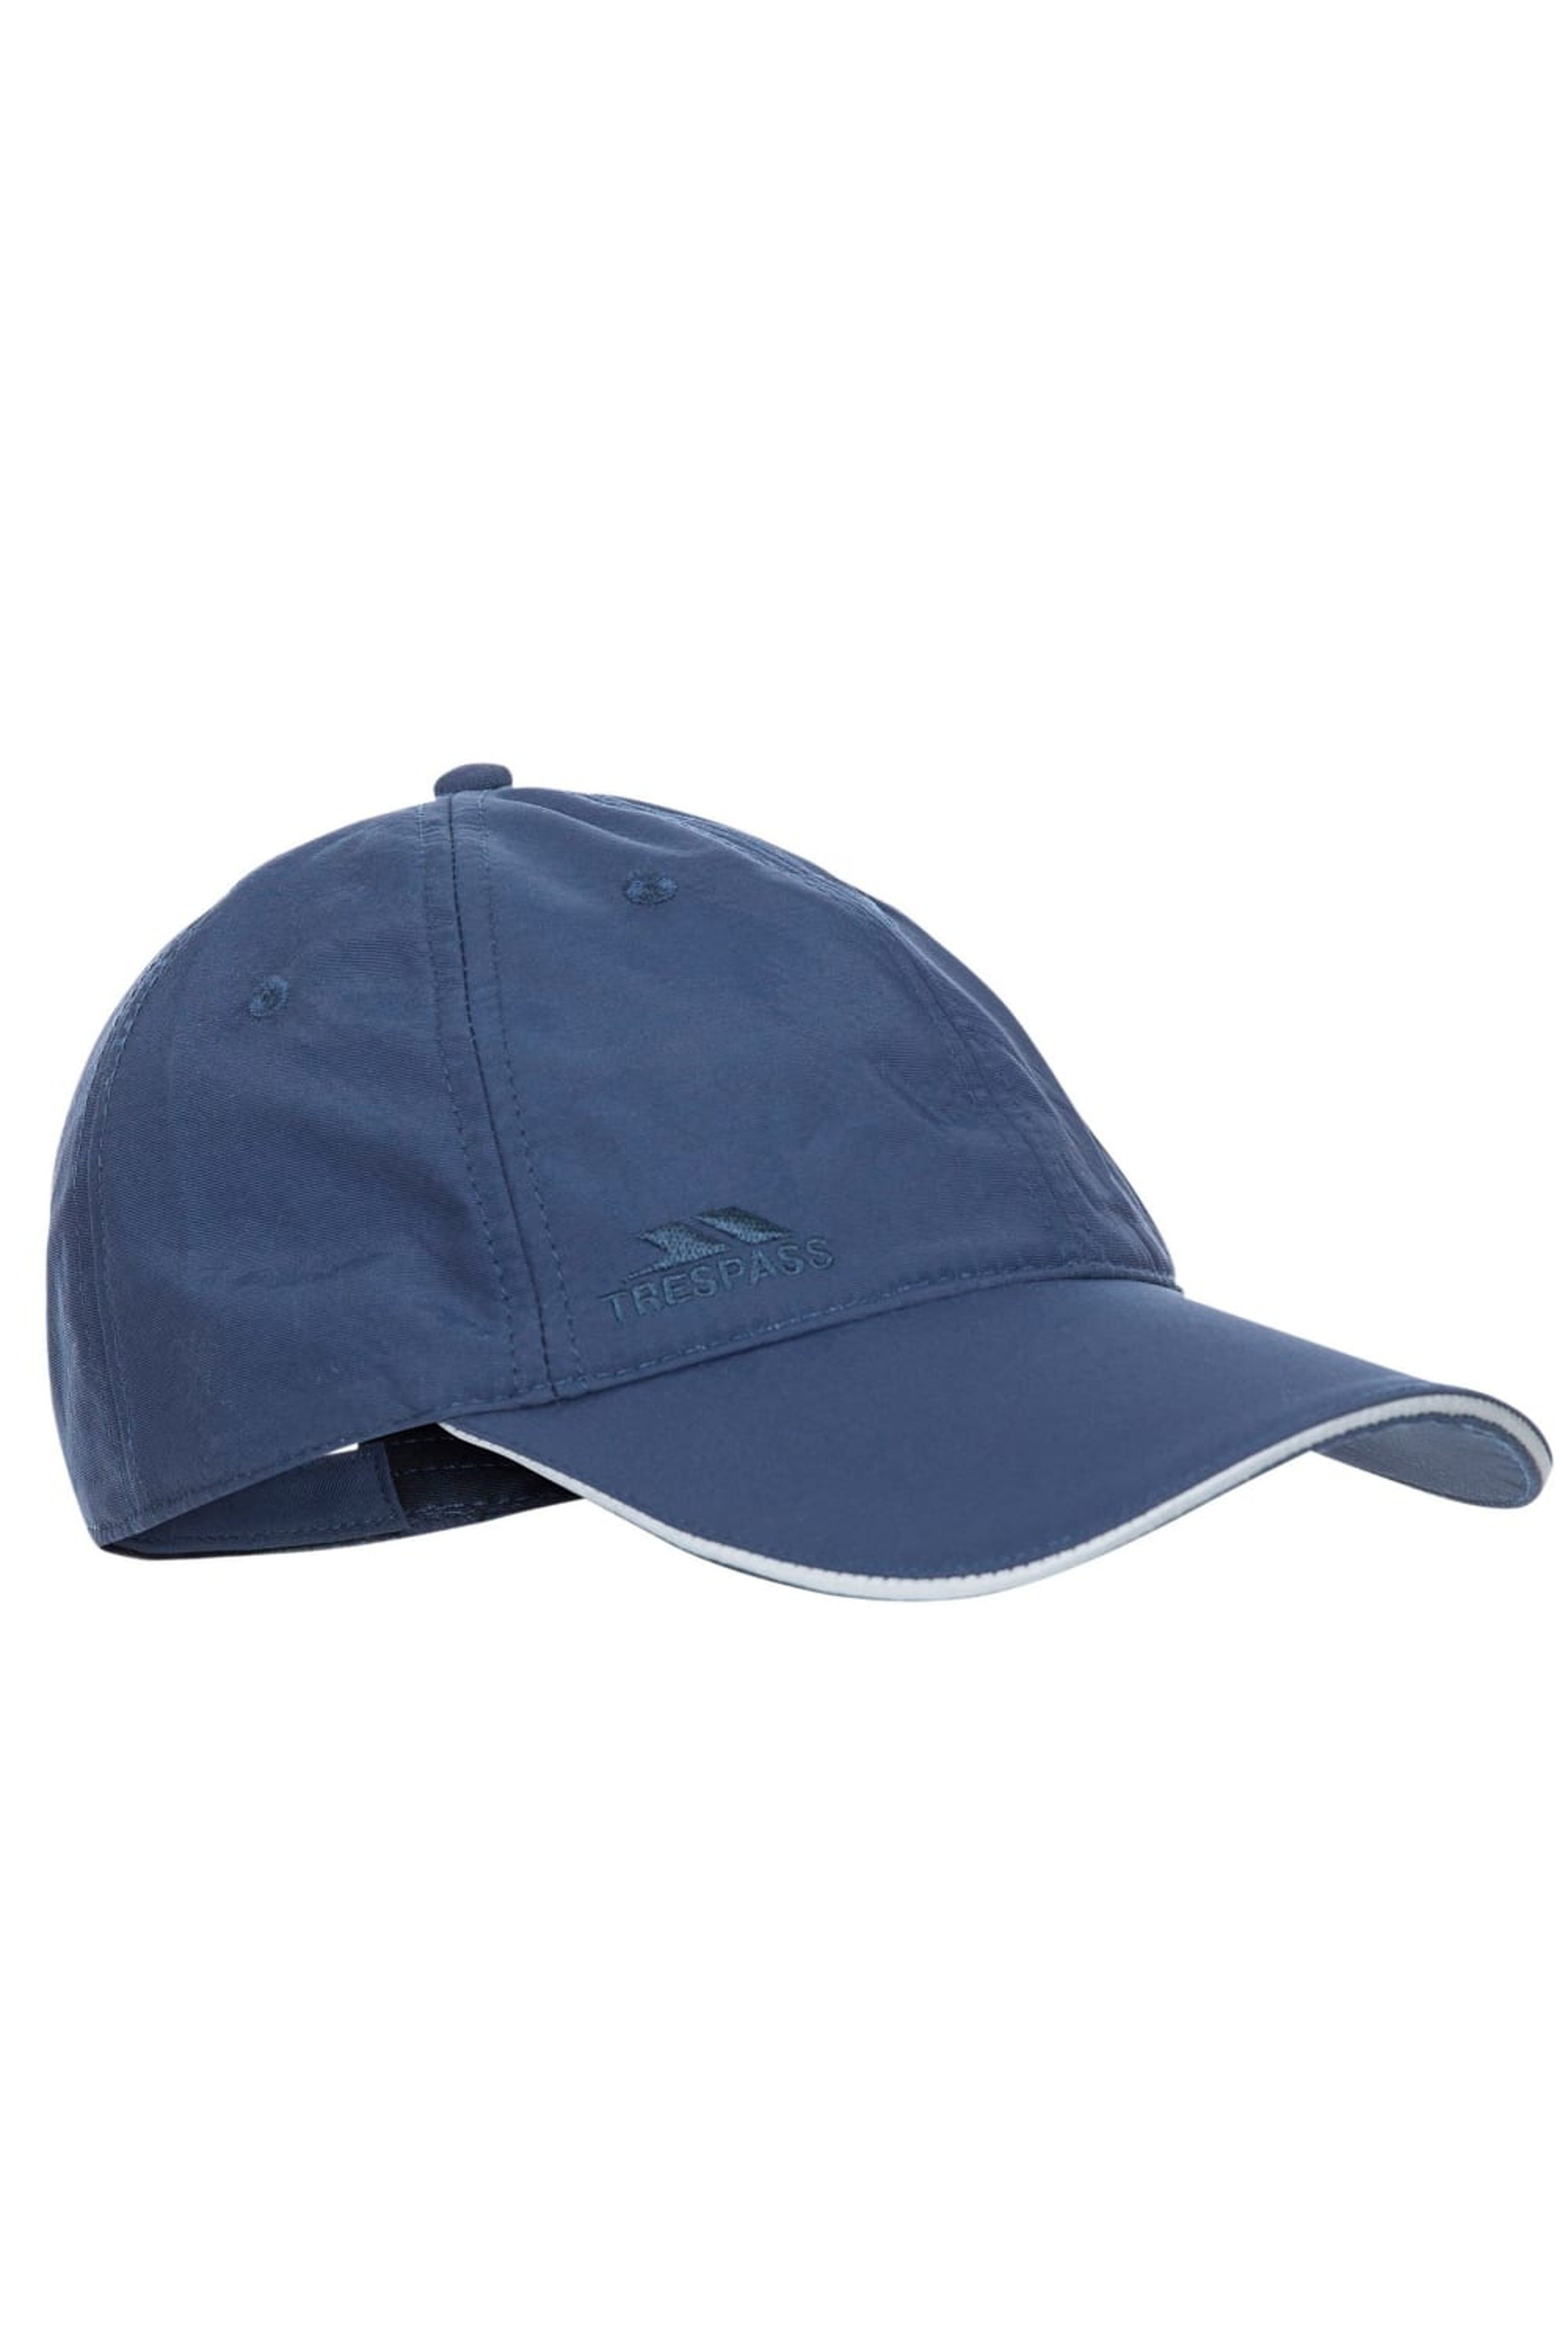 Trespass Mens Cosgrove Quick Dry Baseball Cap (Navy Blue) - ONE SIZE ONLY | Verishop